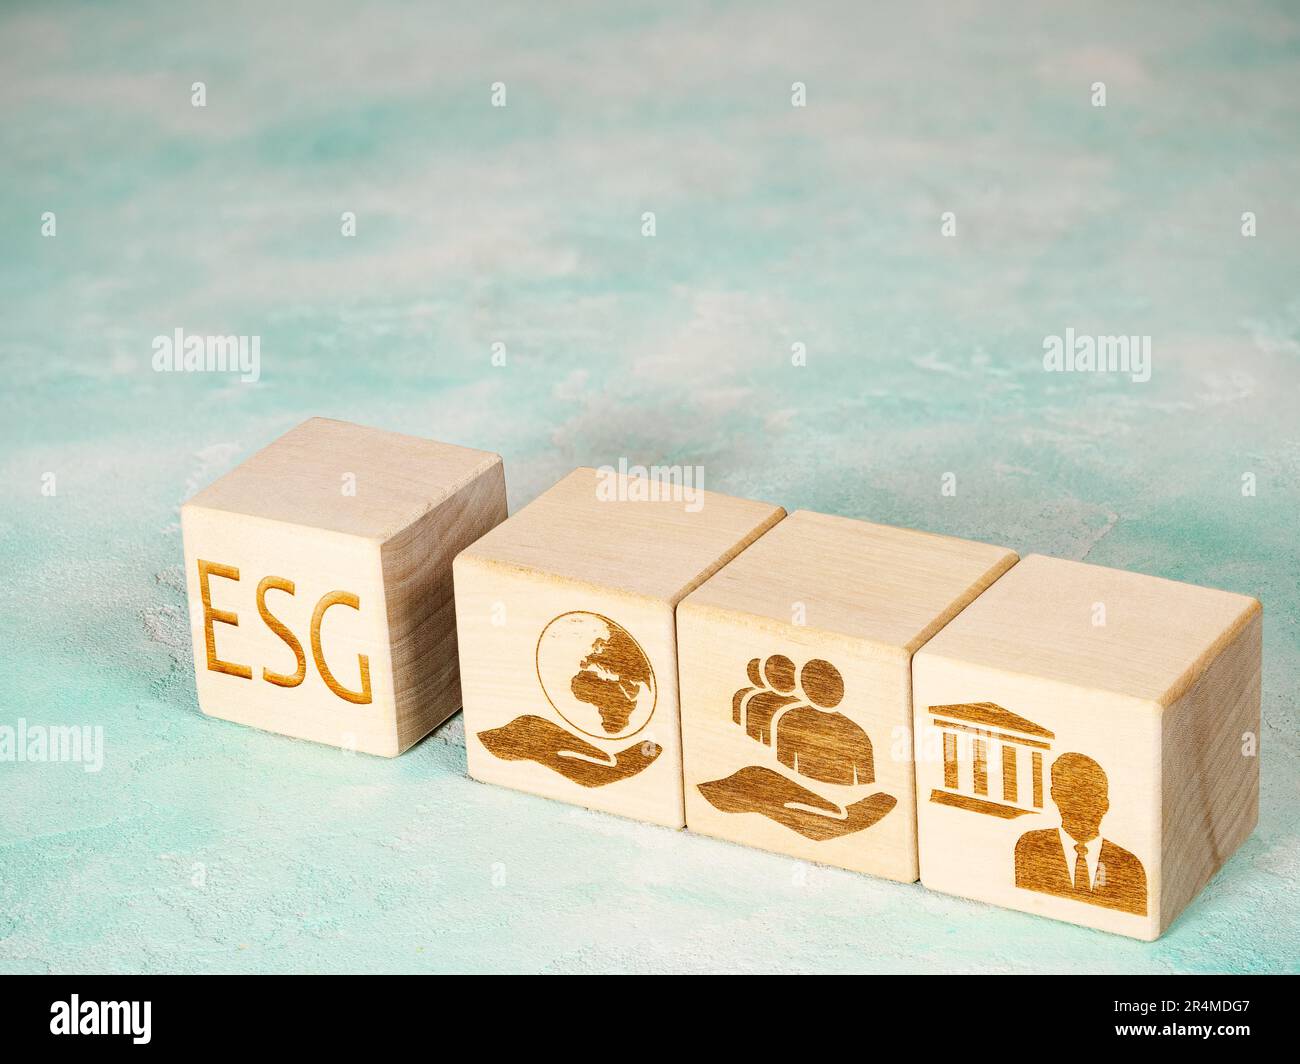 ESG symbols as a concept of environmental conservation, governance and social principles Stock Photo